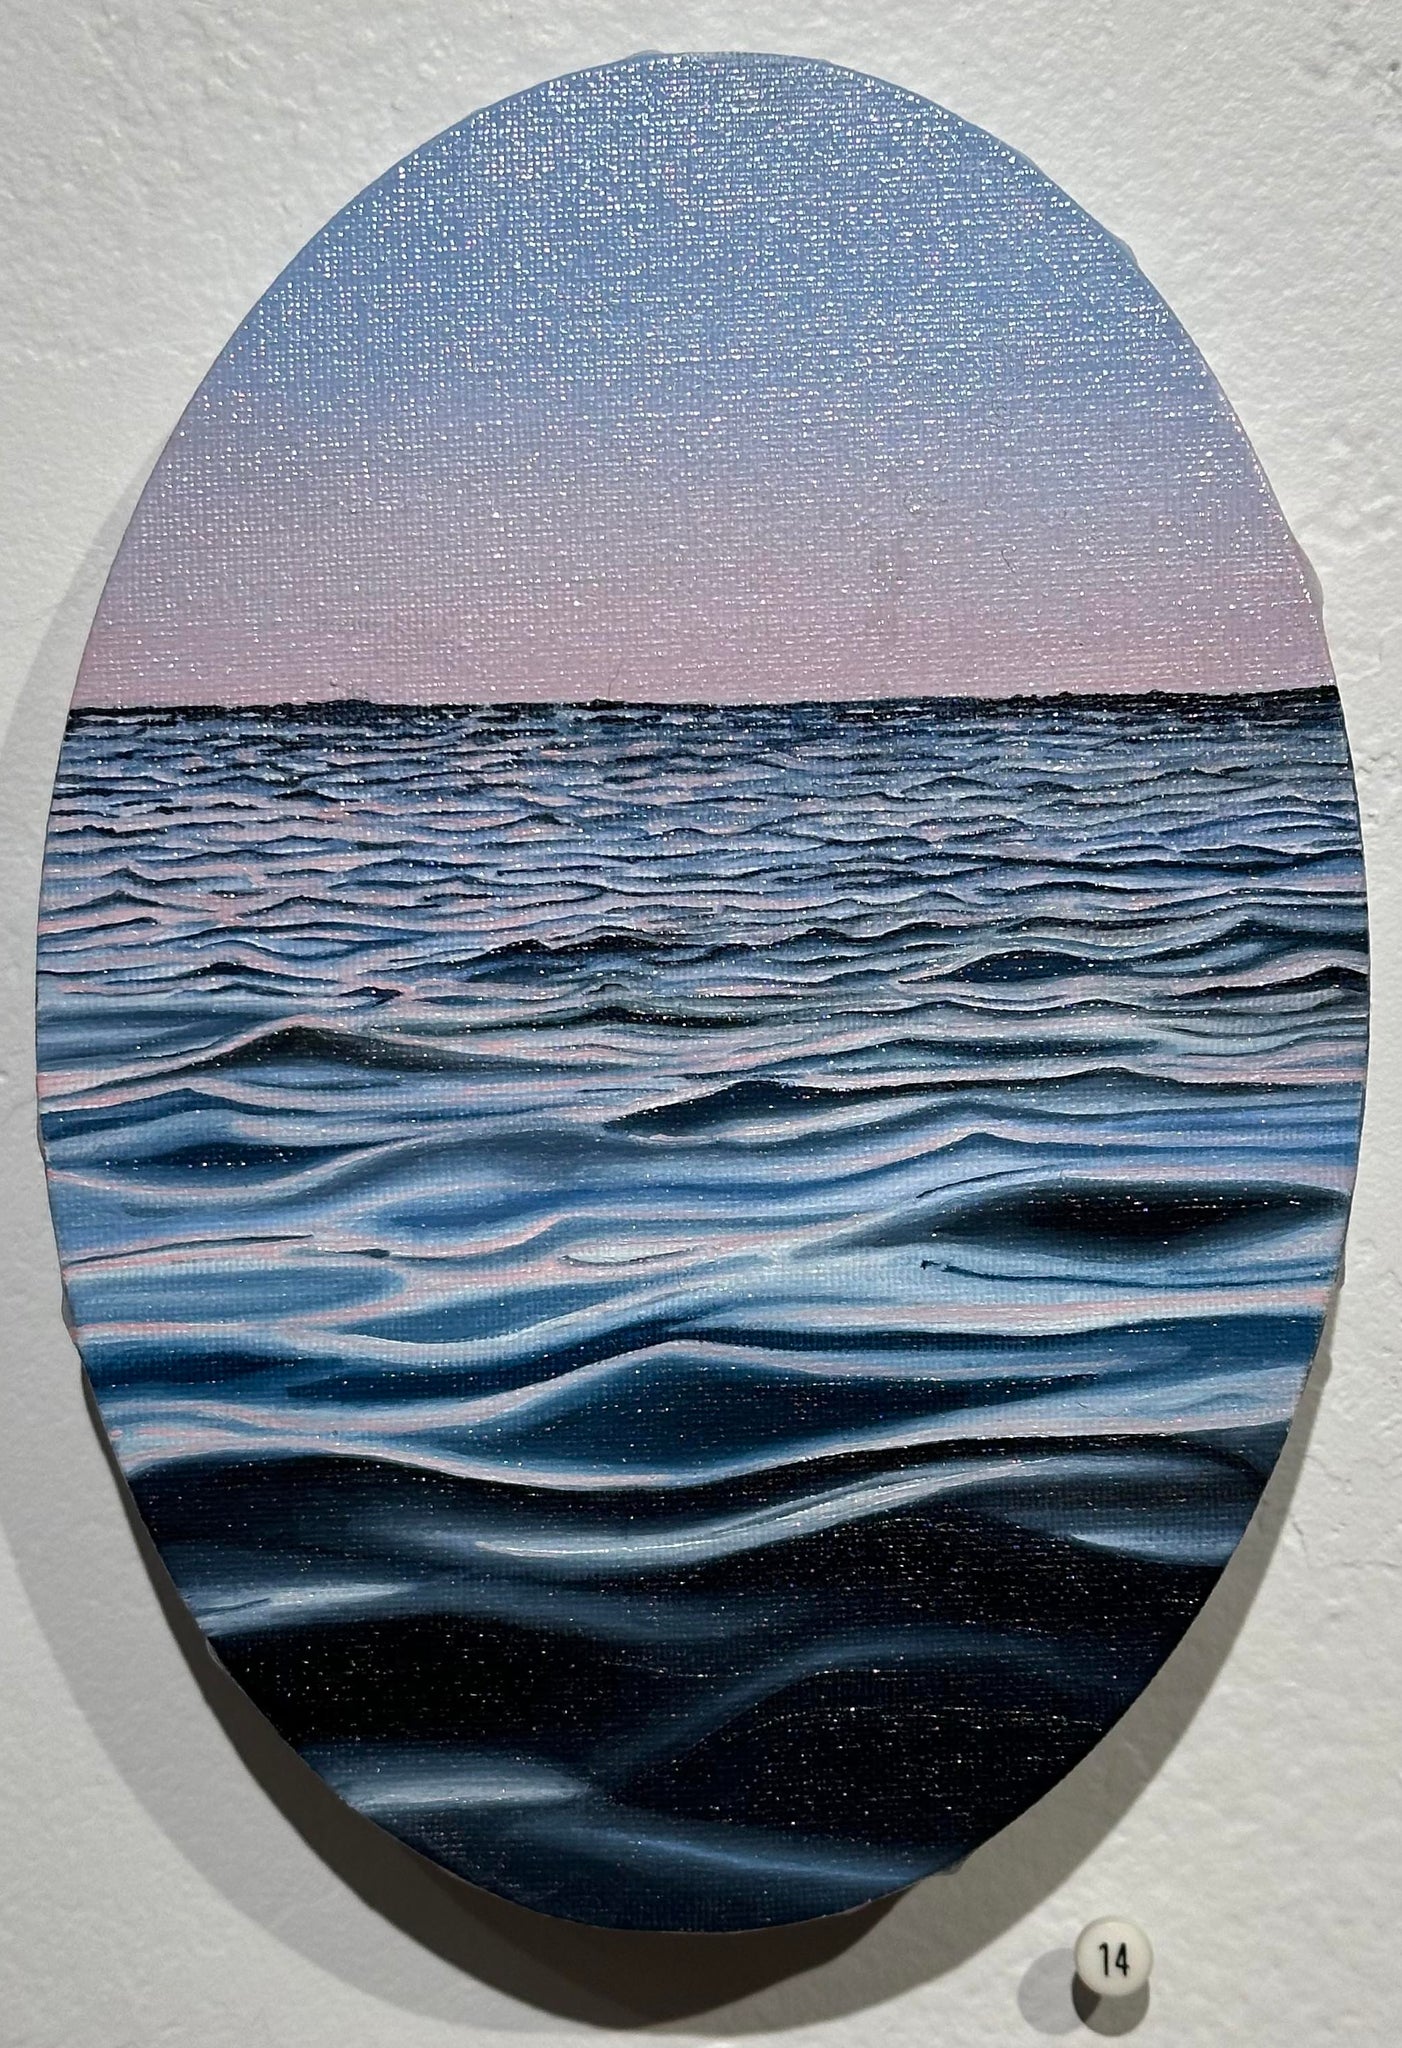 The Shape of Water by Jenna Mchugh